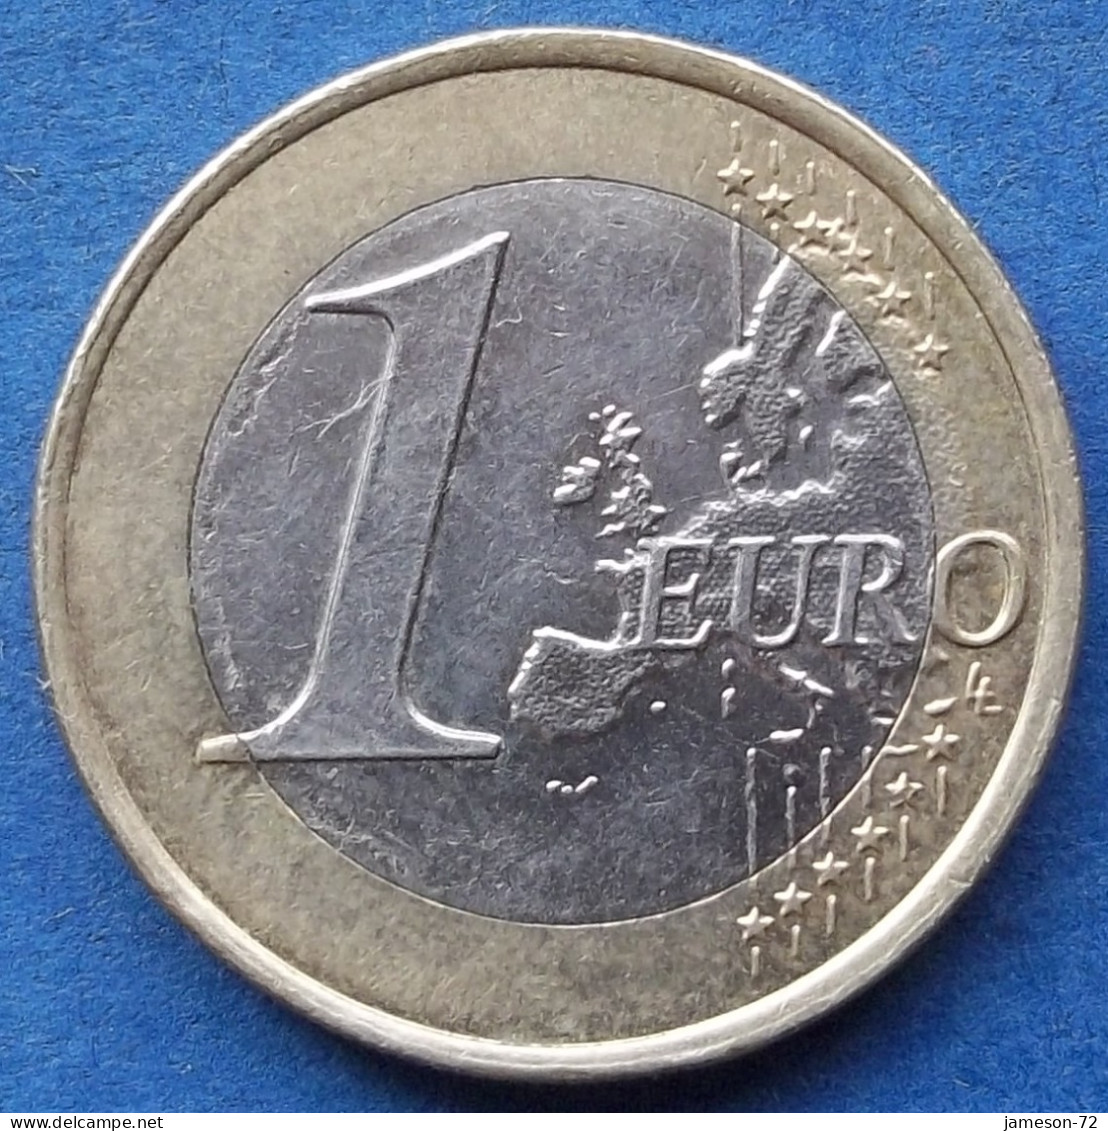 MALTA - 1 Euro 2019 "Maltese Cross" KM# 131 Euro Coinage (2008) - Edelweiss Coins - Malte